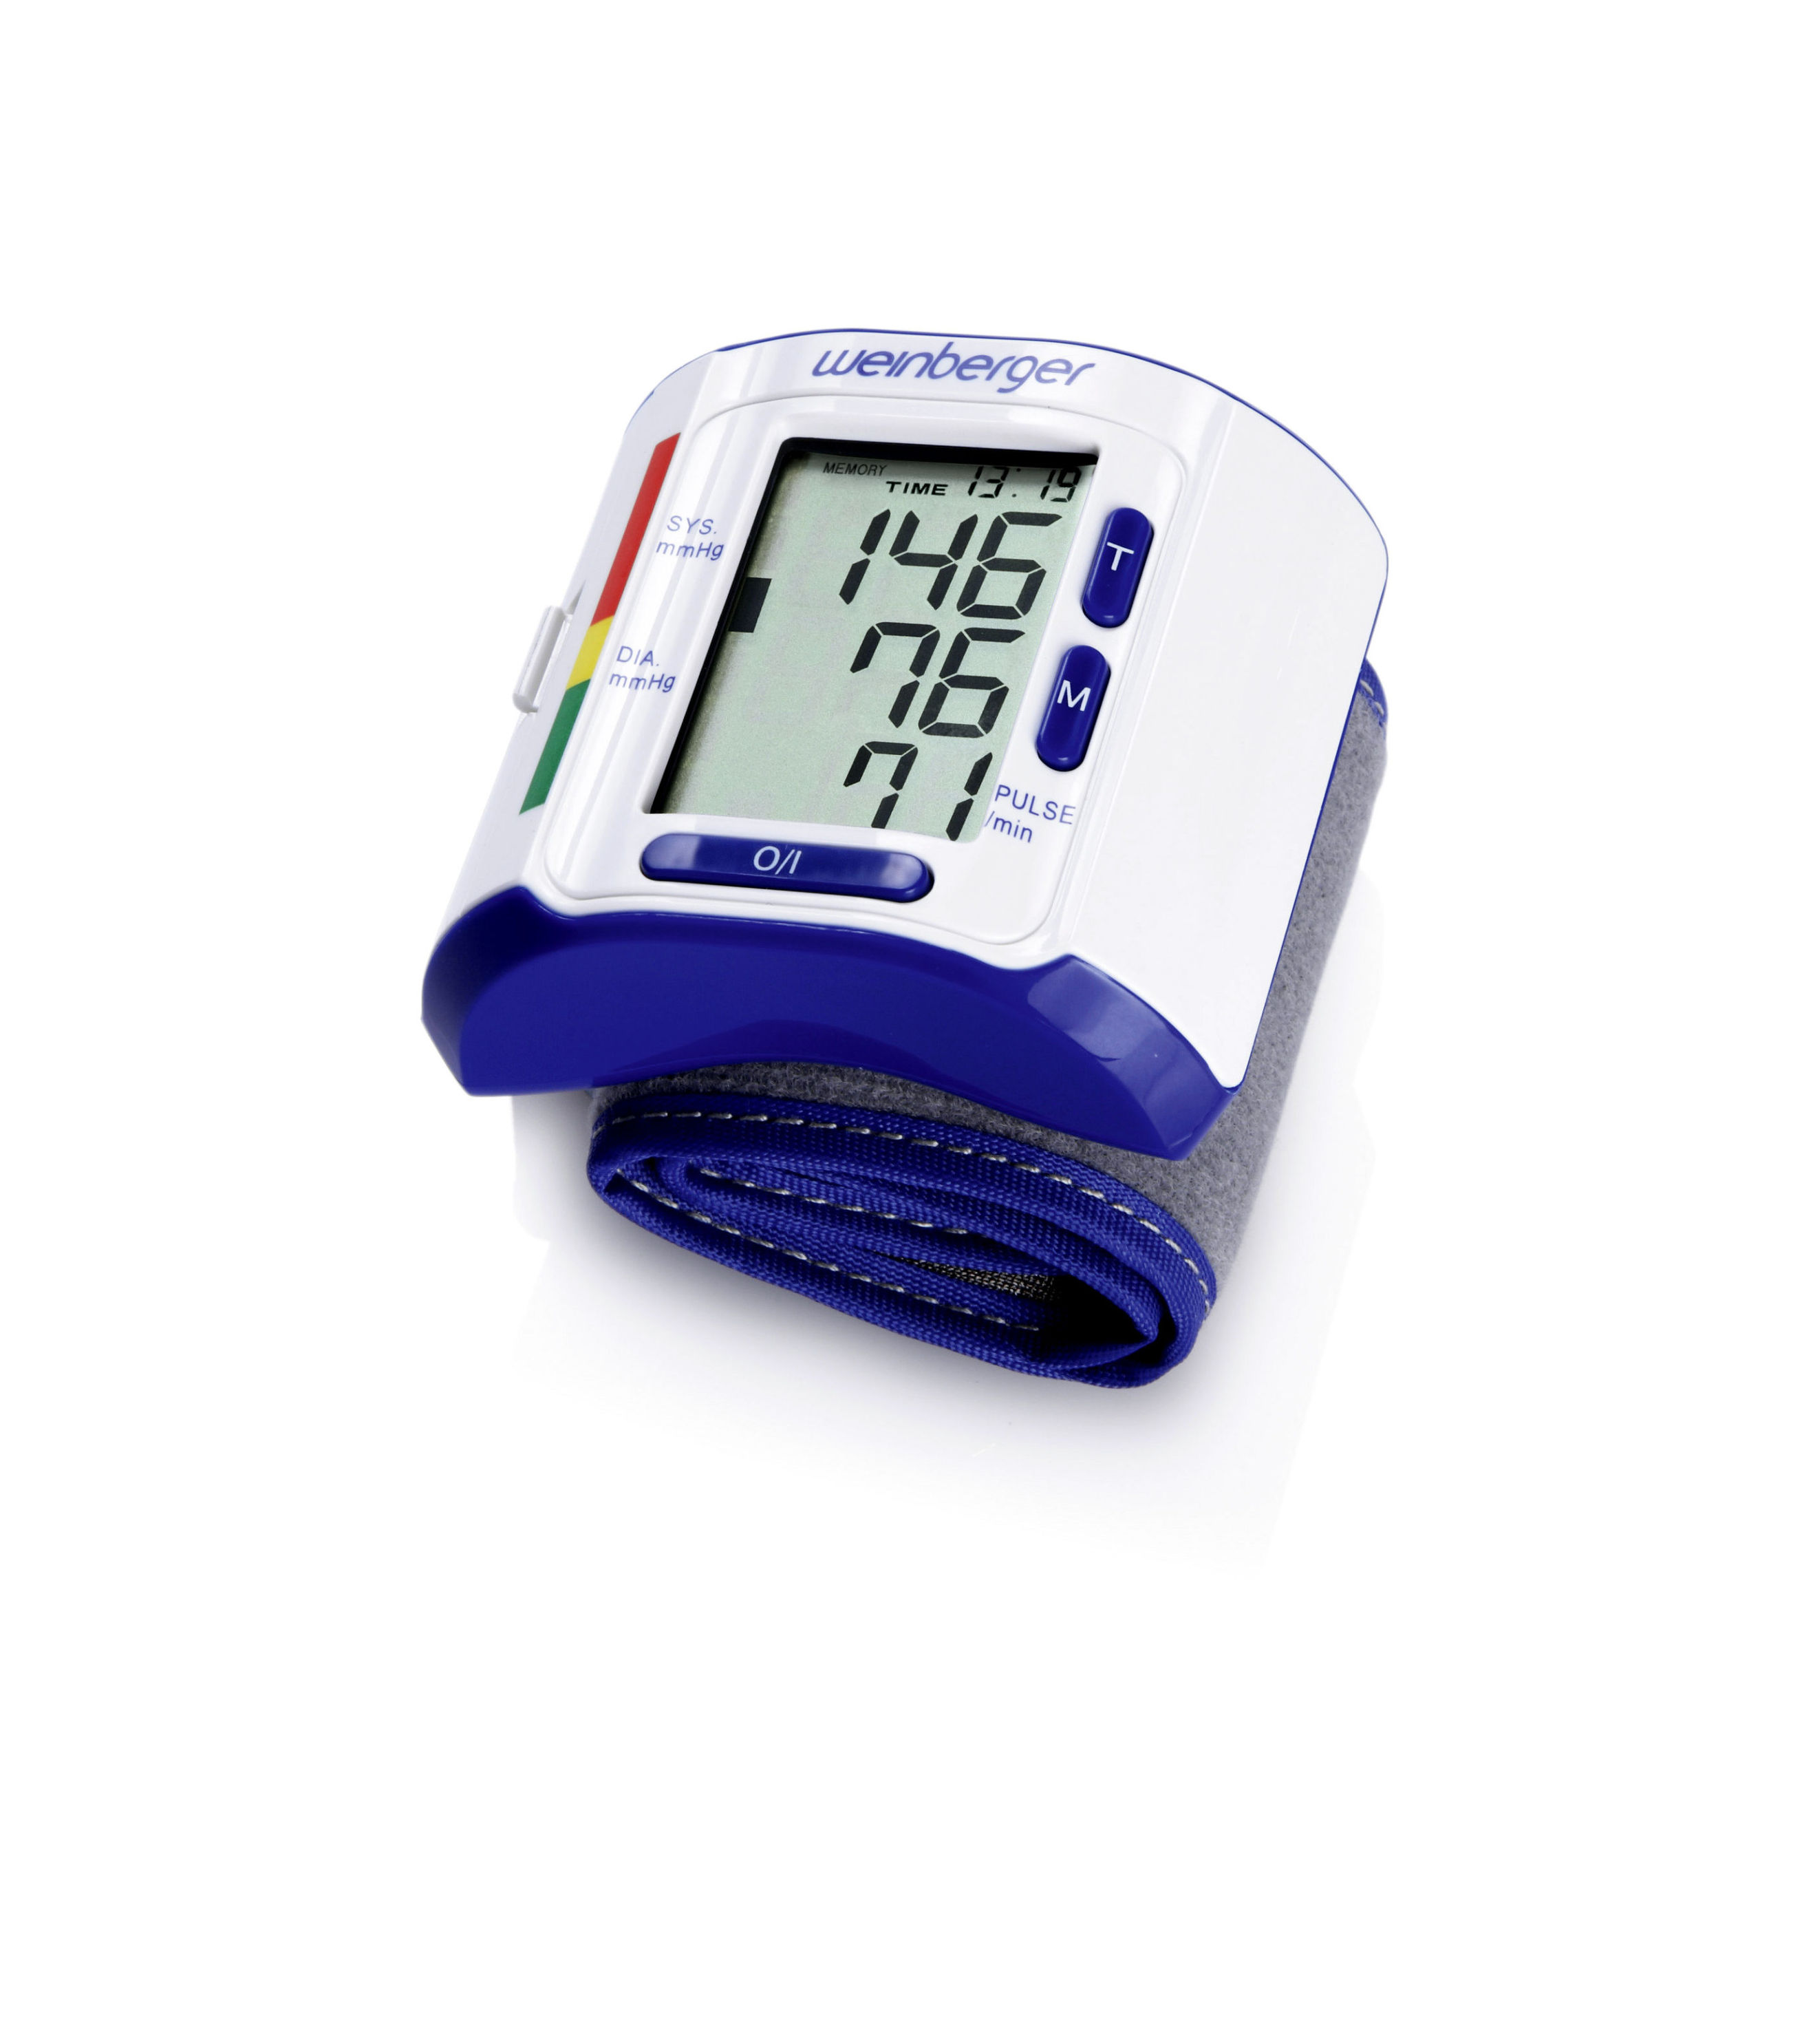 Mini-Handgelenk-Blutdruckmessgerät KP-6241 | Weltbild.de